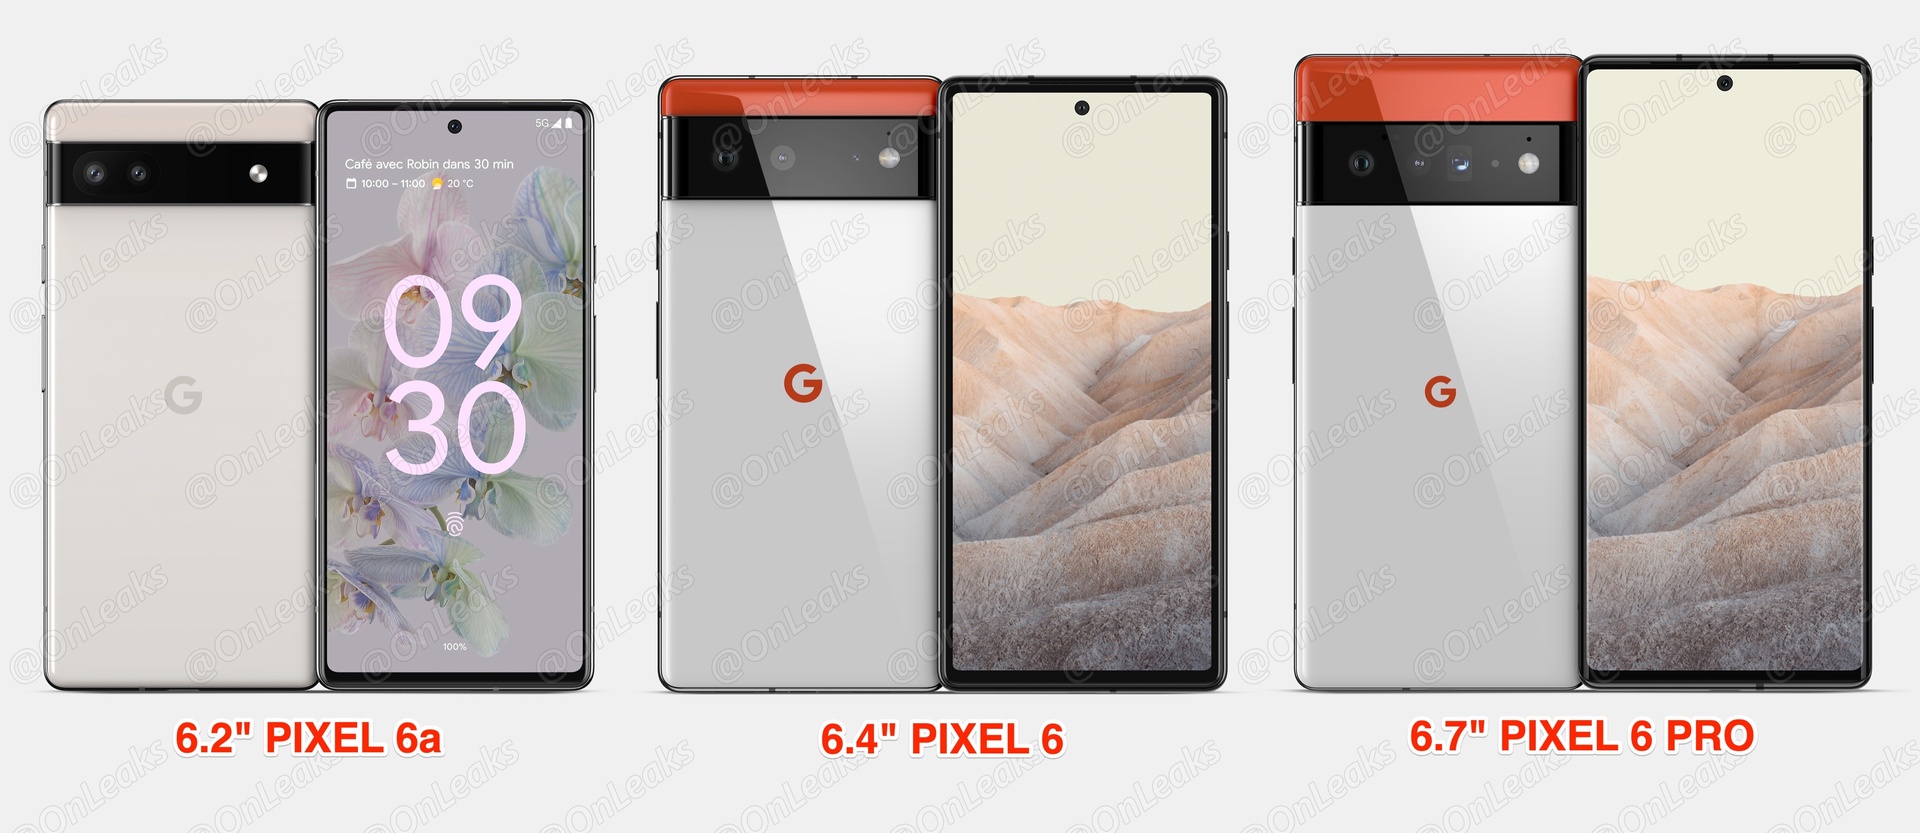 Direct comparison between Pixel 6a, Pixel 6 and Pixel 6 Pro